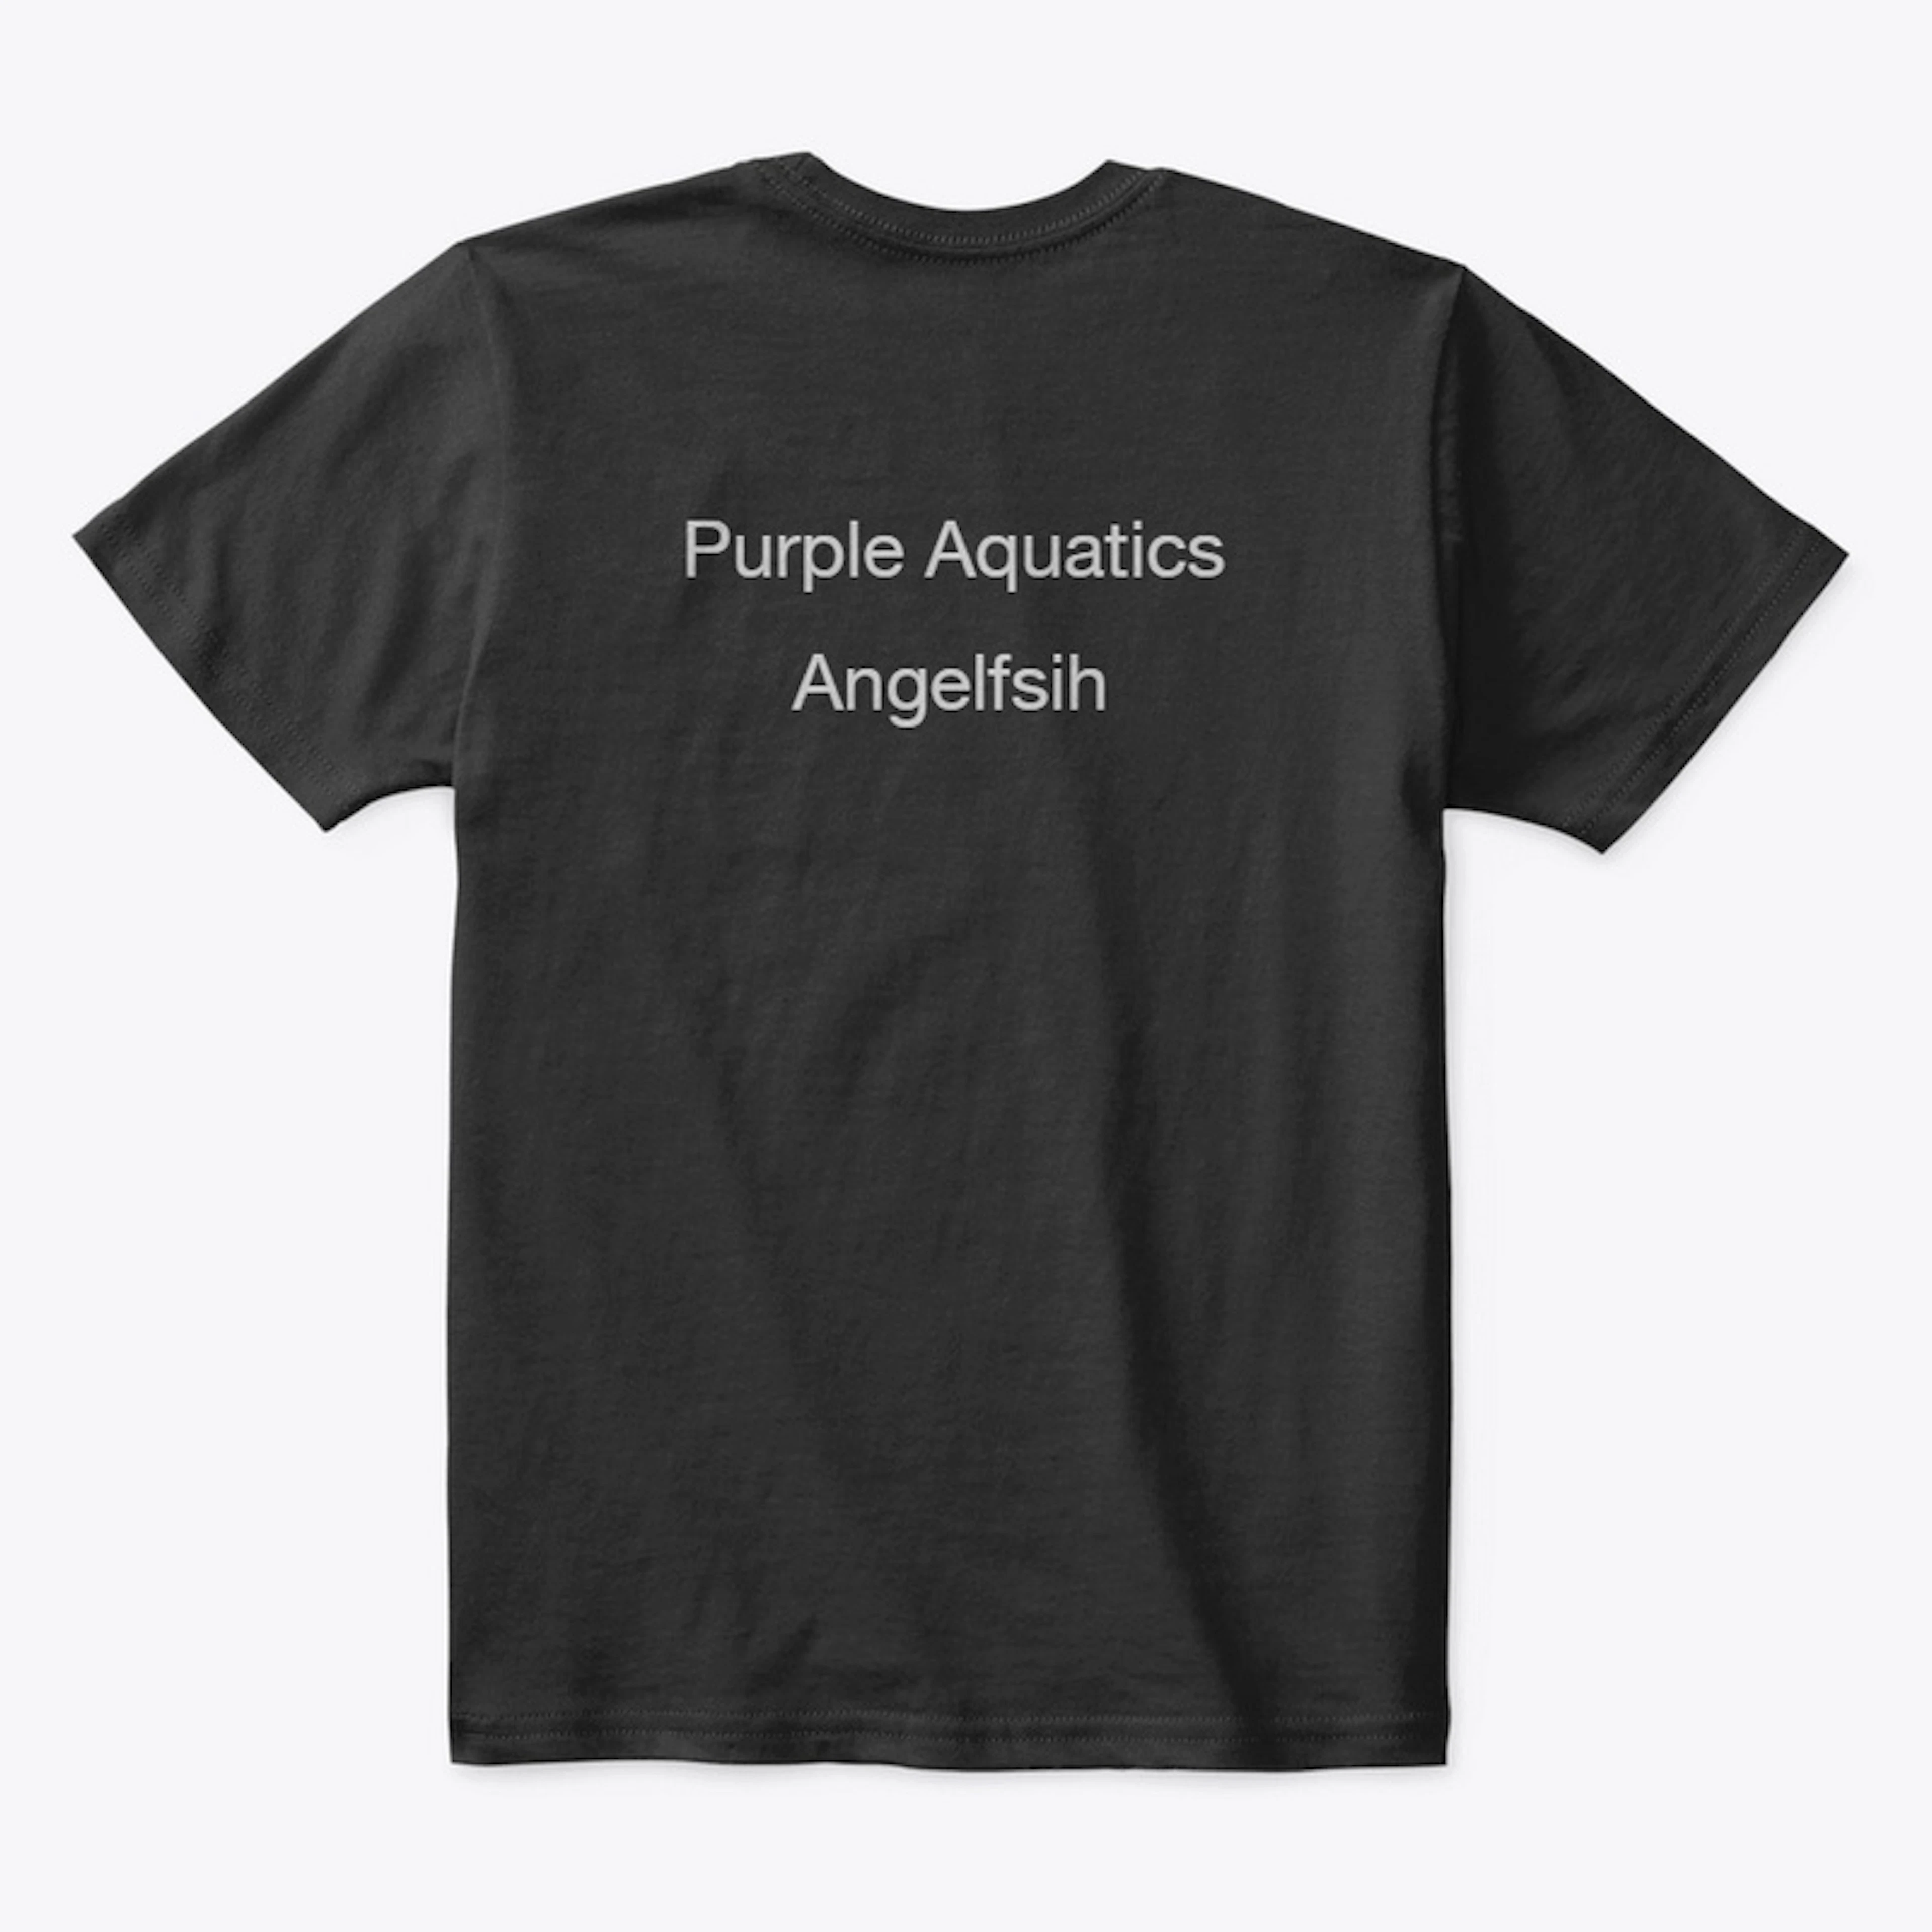 Angelfish design